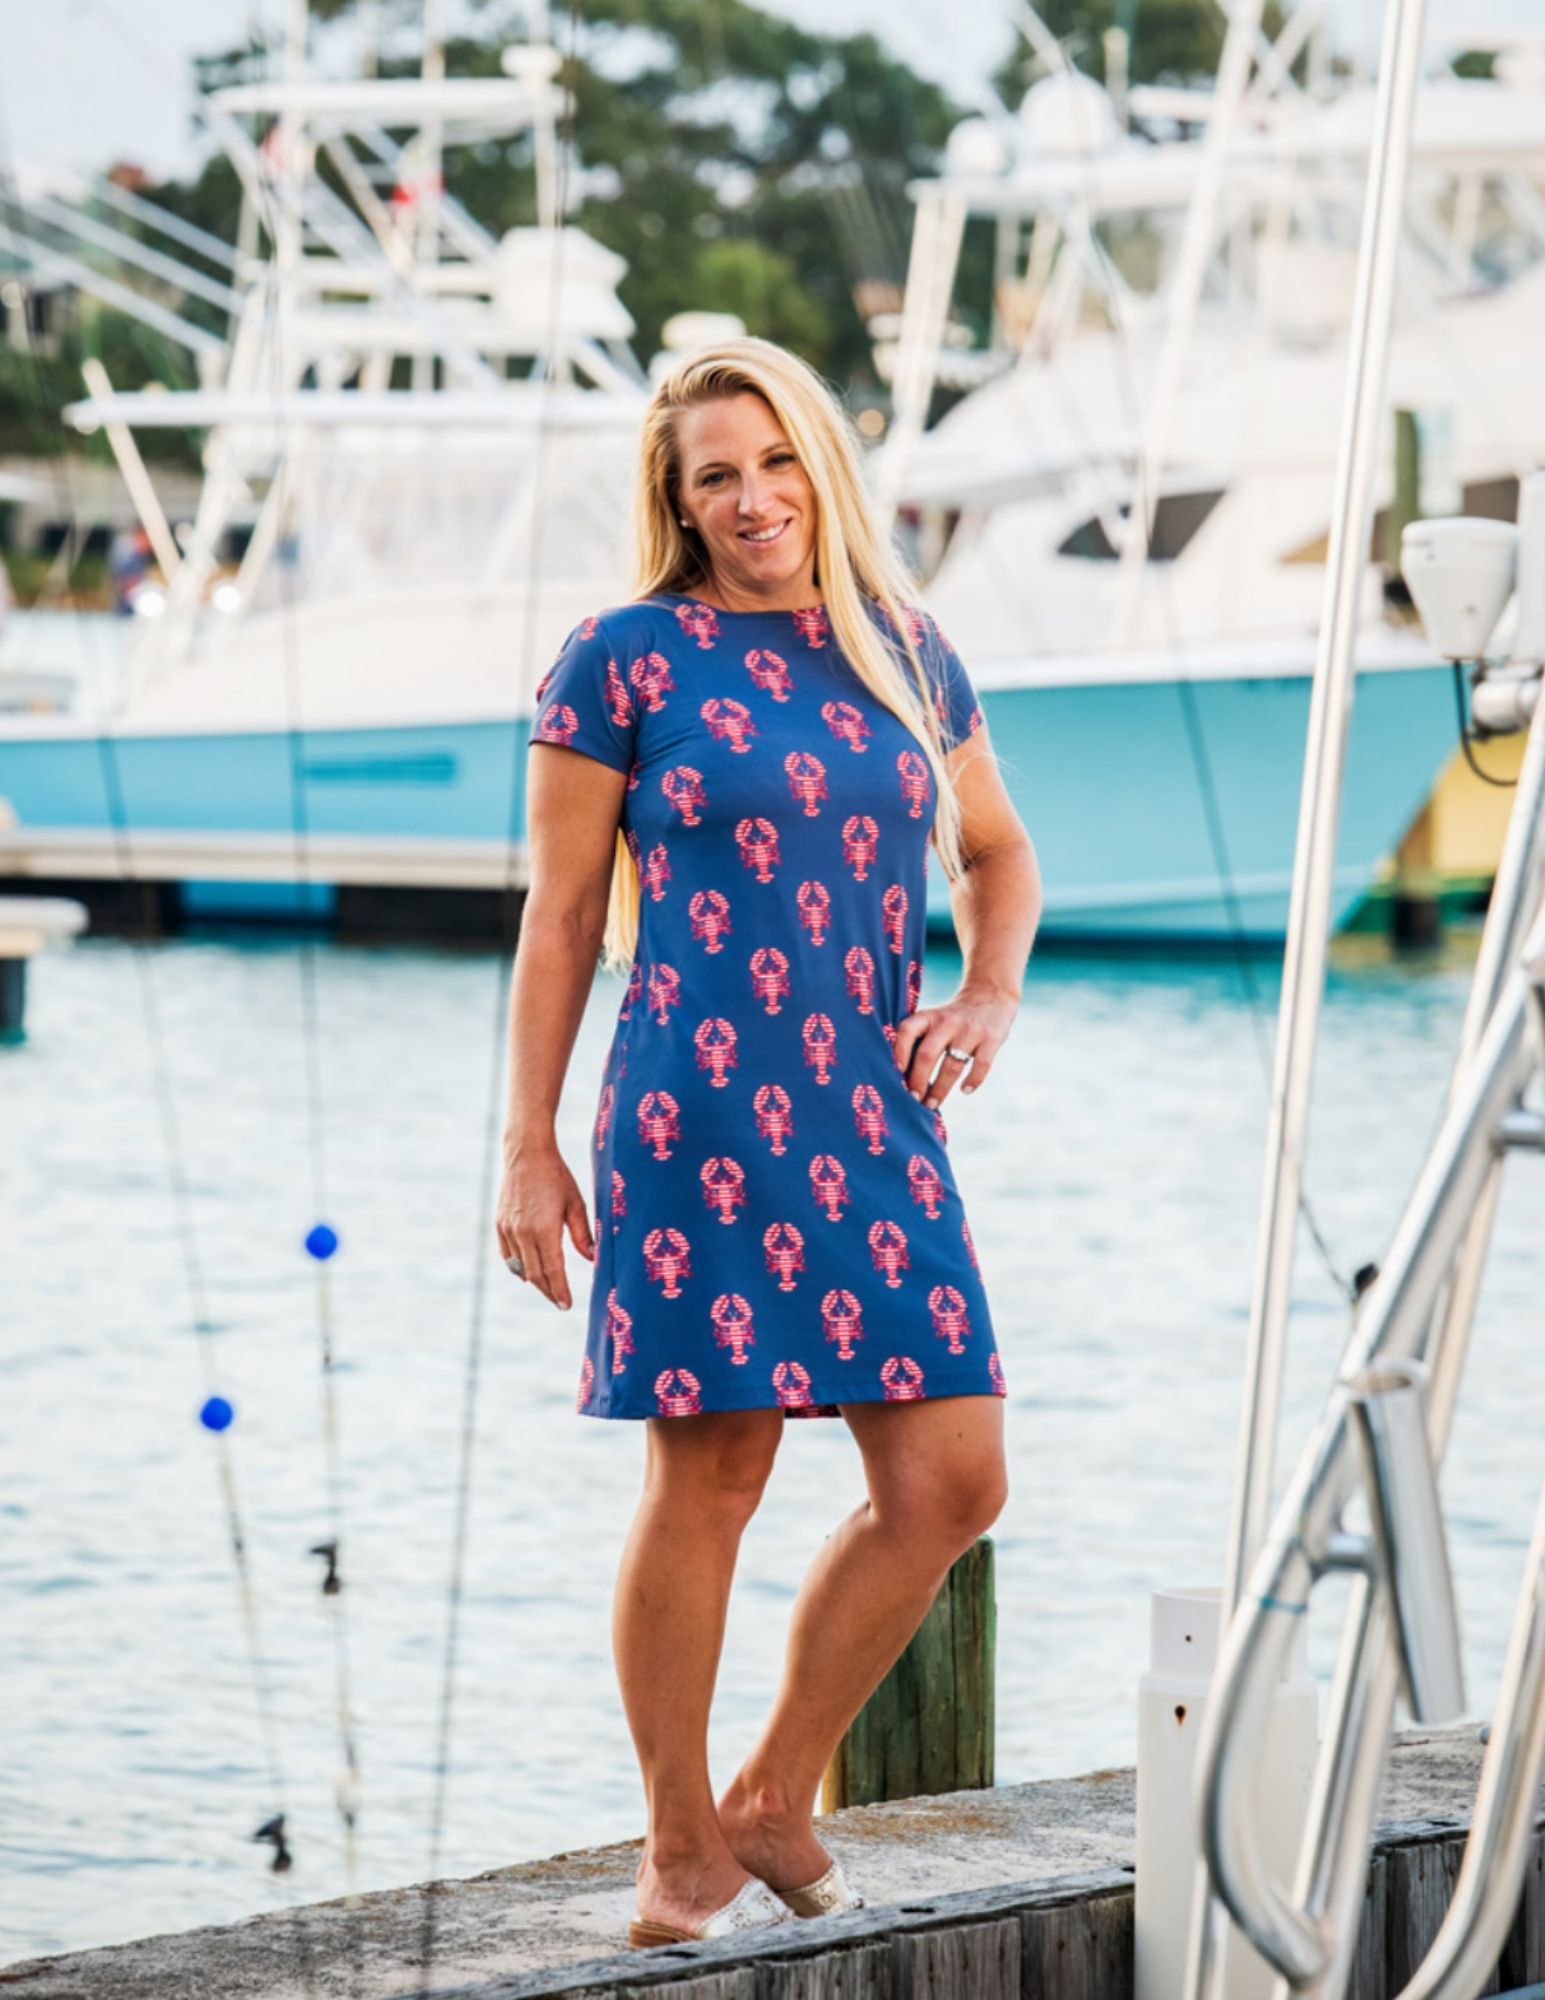 Summer Lovin' in the Marina Lobsters Dress from Sailor-Sailor